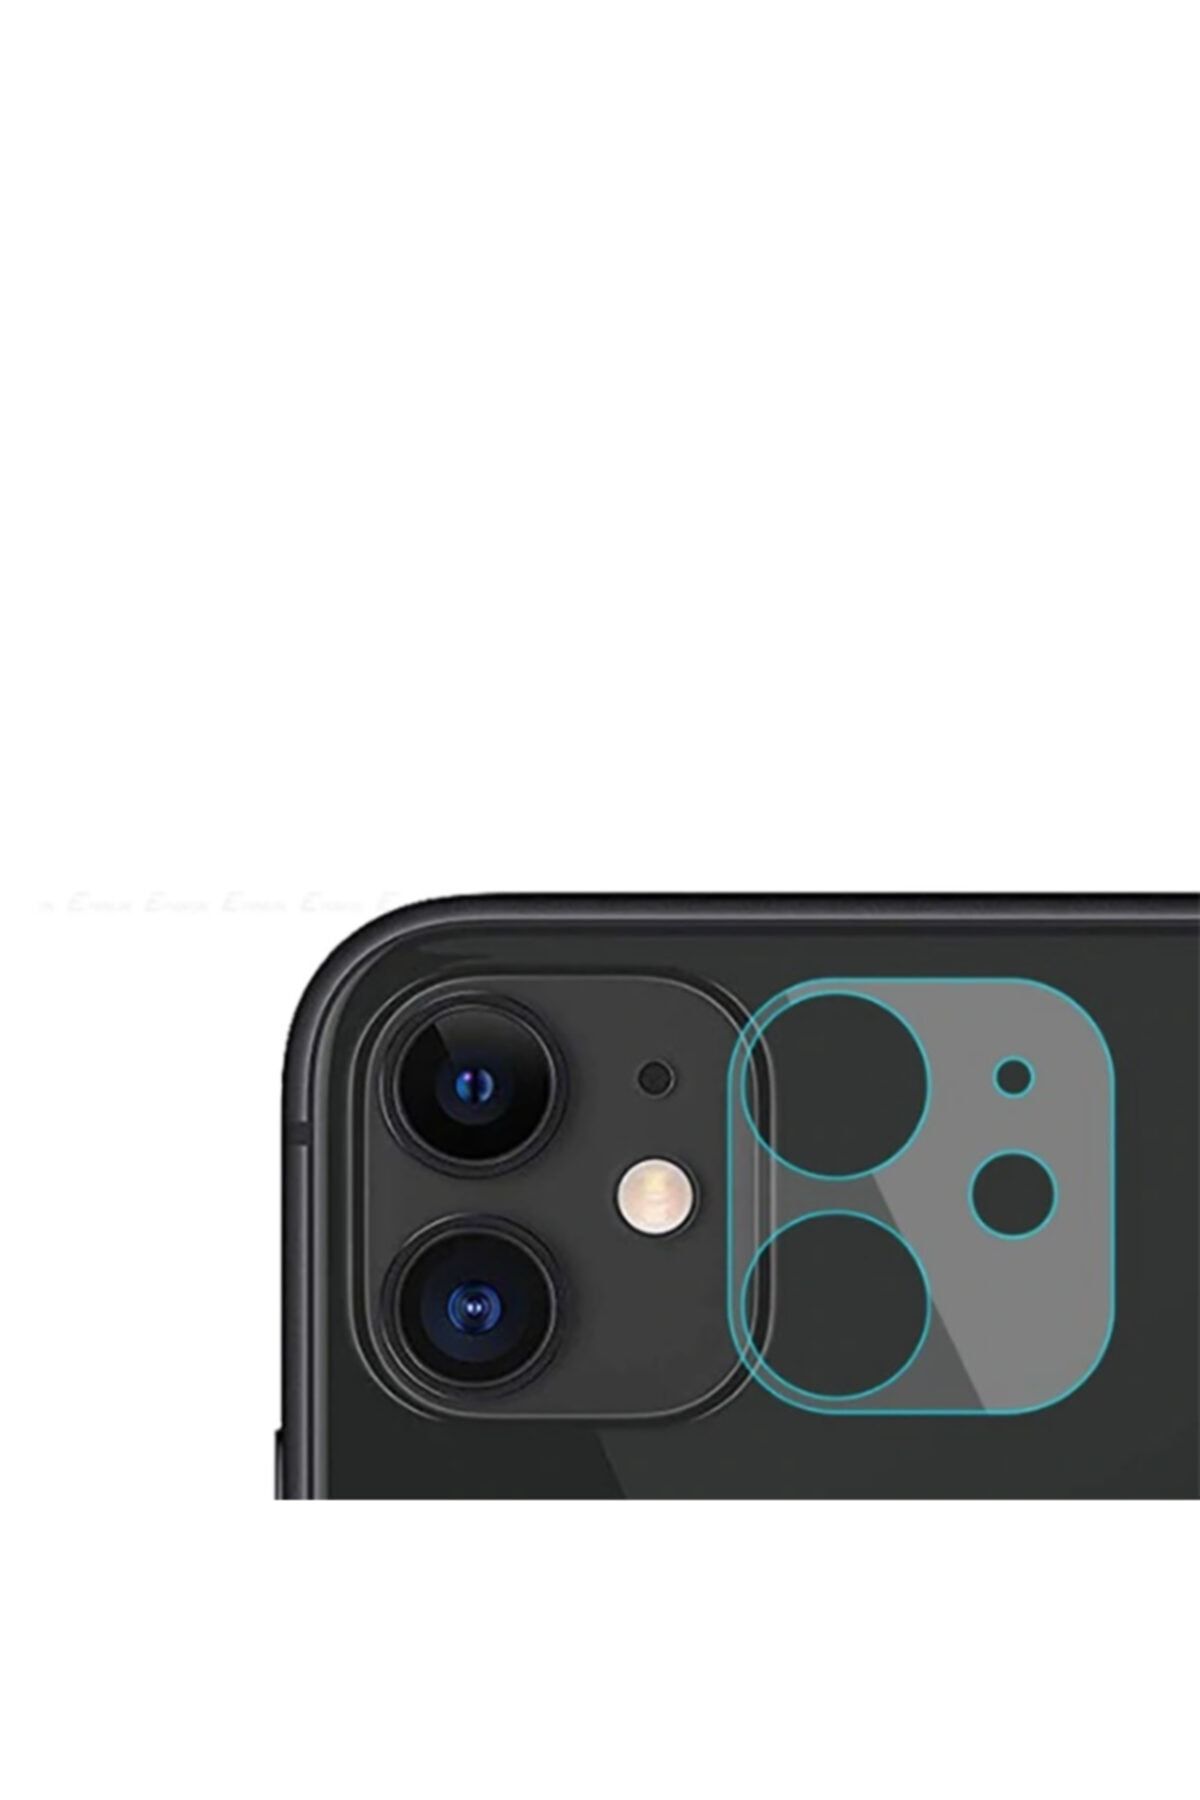 tekno grup Iphone 11 Uyumlu Kamera Lens Koruyucu Cam